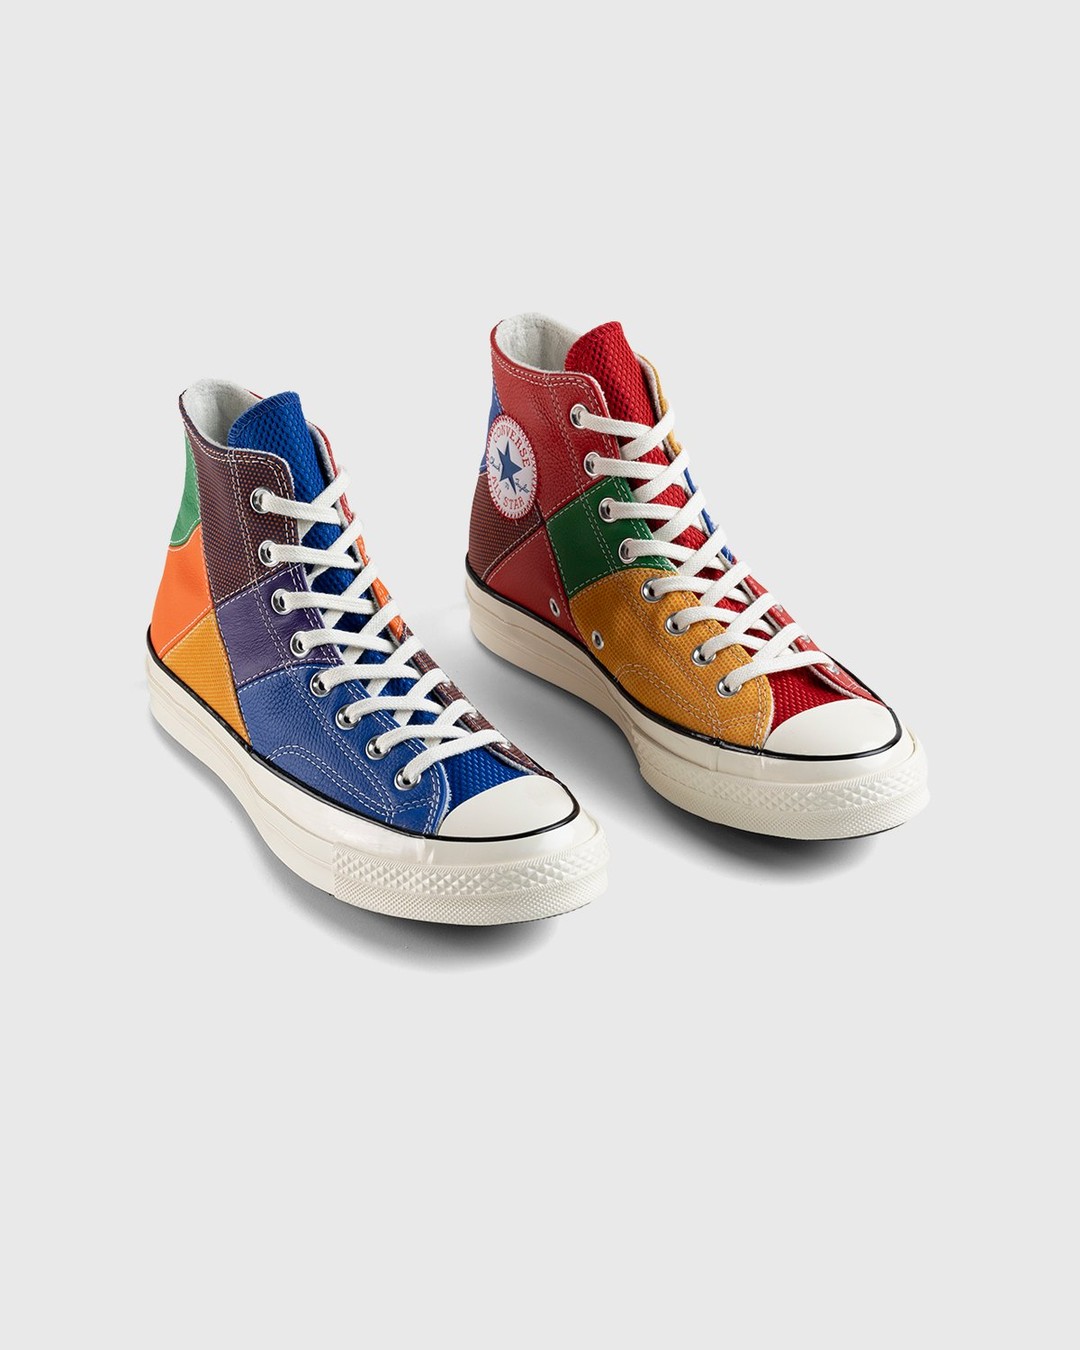 Converse – Chuck 70 Hi Game Royal/University Red - High Top Sneakers - Multi - Image 3